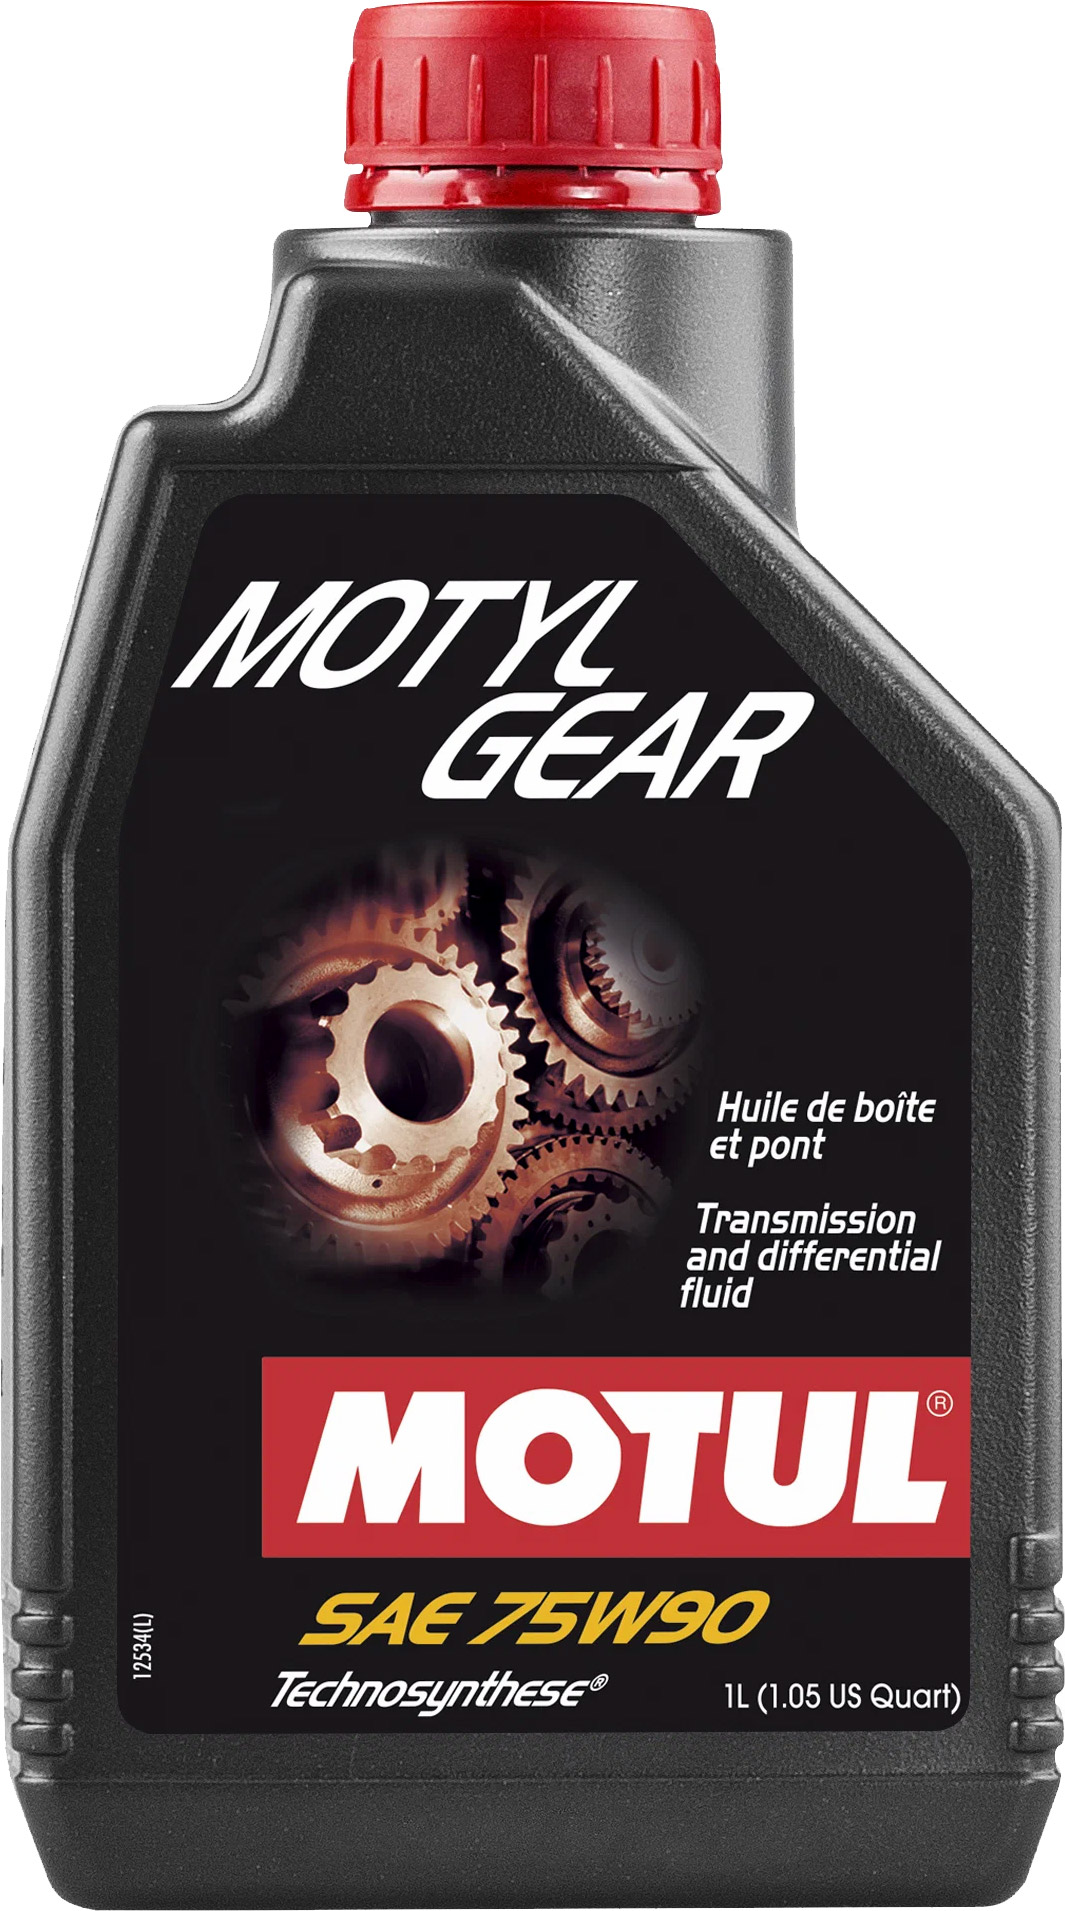 Трансмиссионное масло MOTUL Motylgear 75W90, 1л